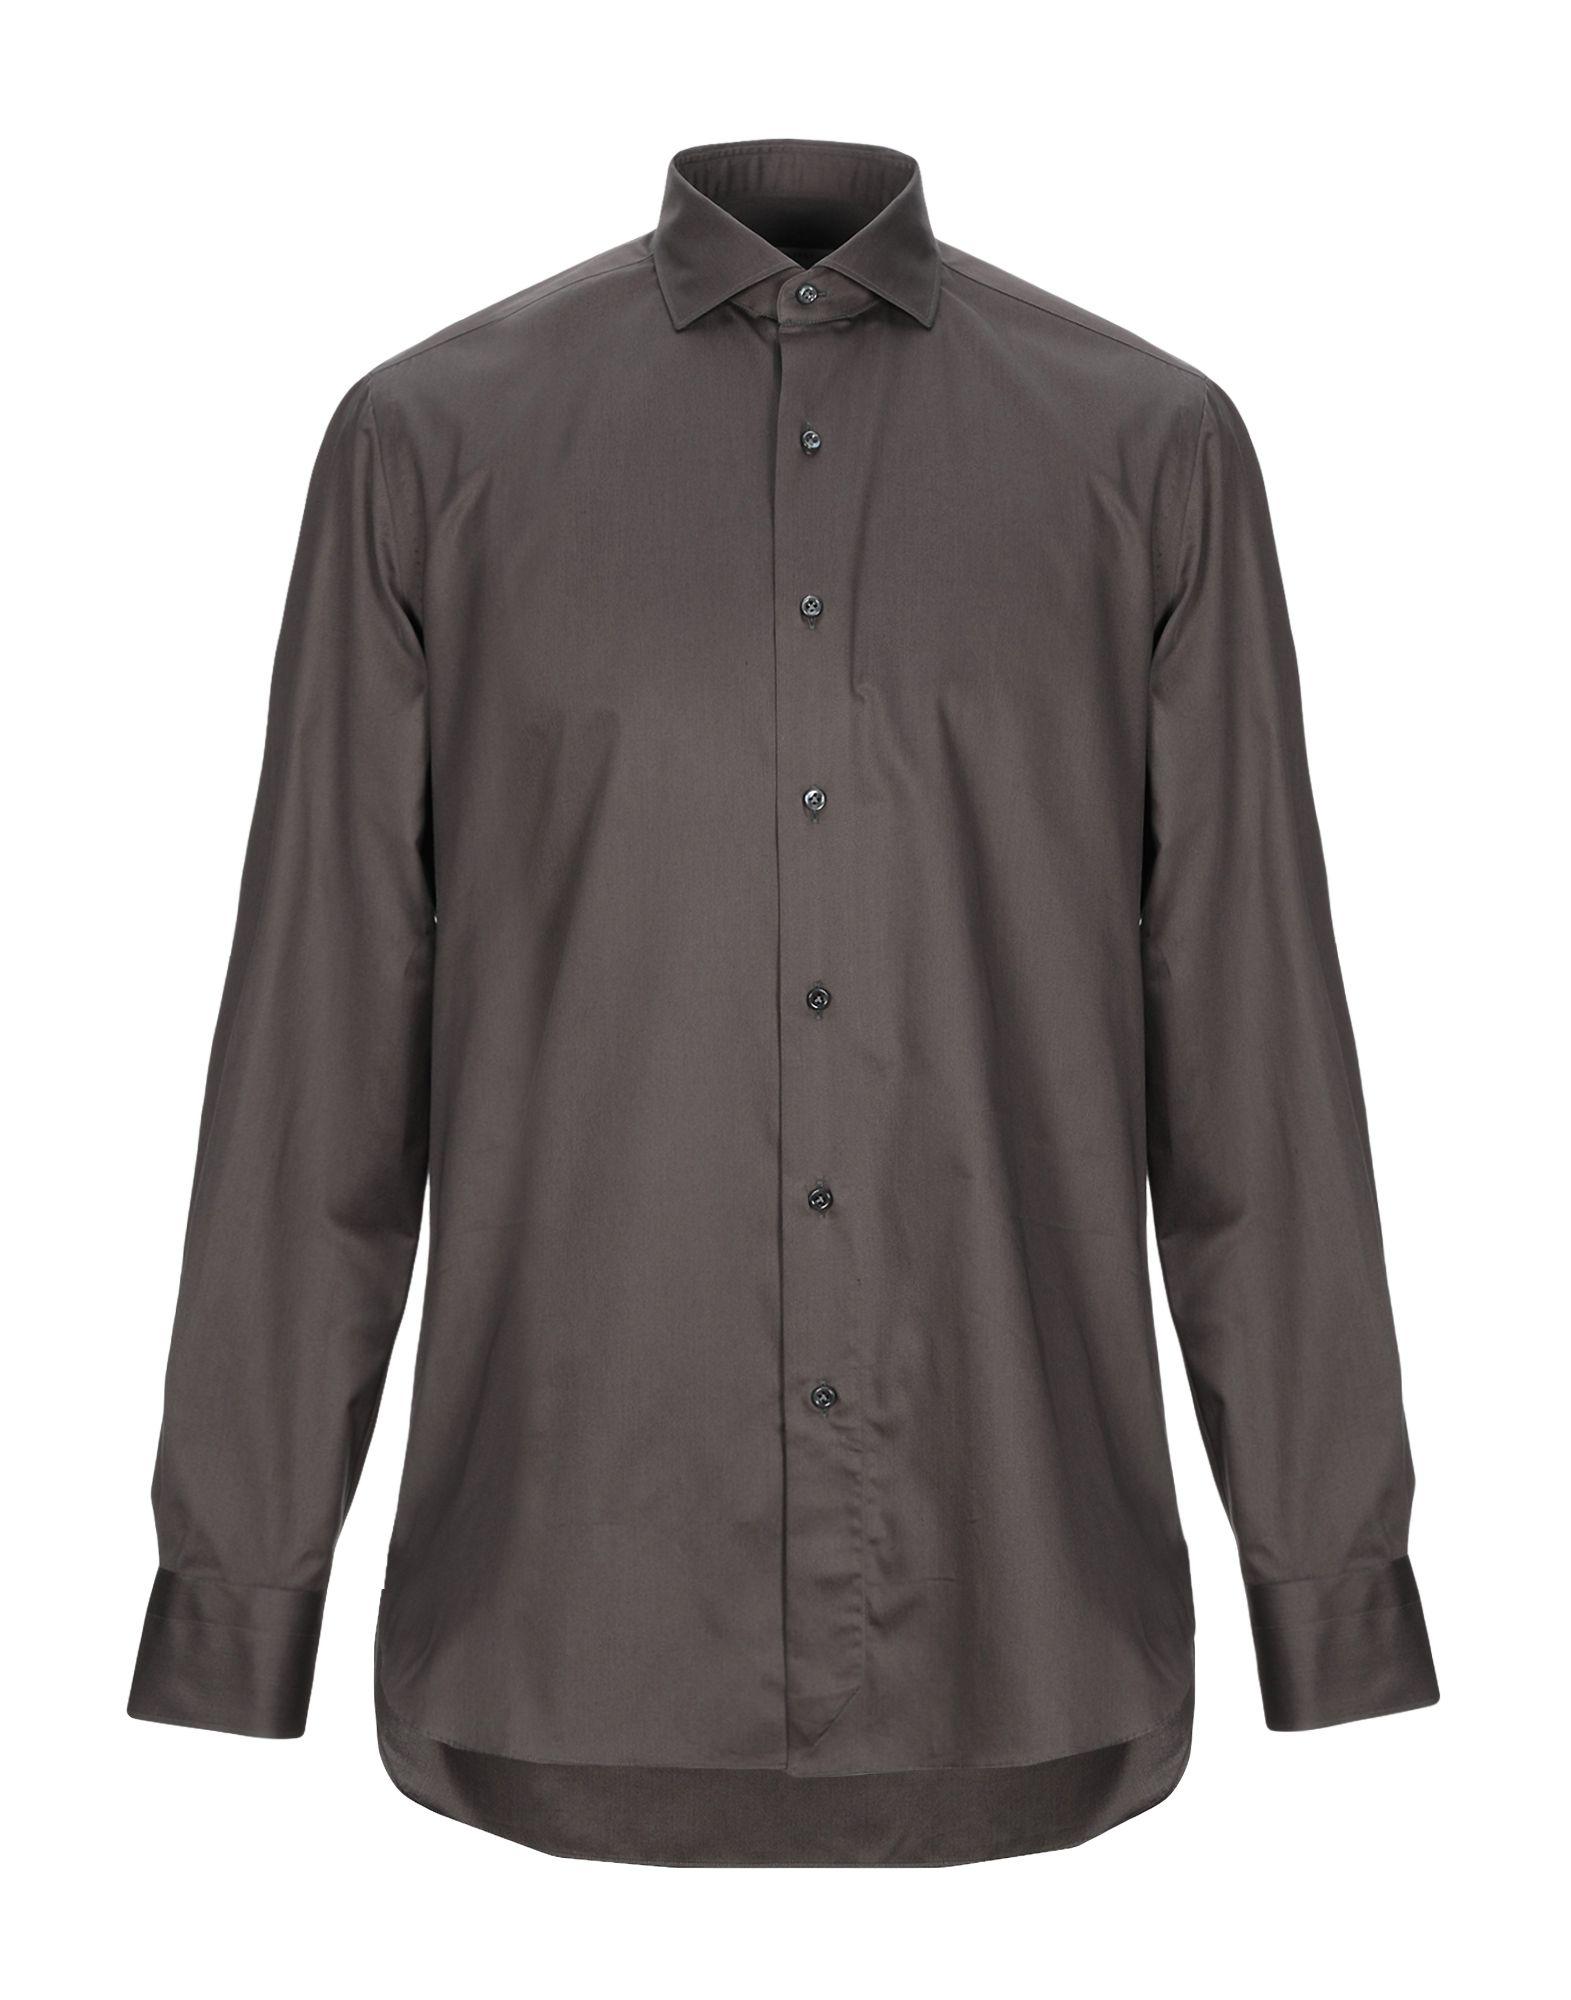 Boglioli Cotton Shirt in Khaki (Gray) for Men - Lyst